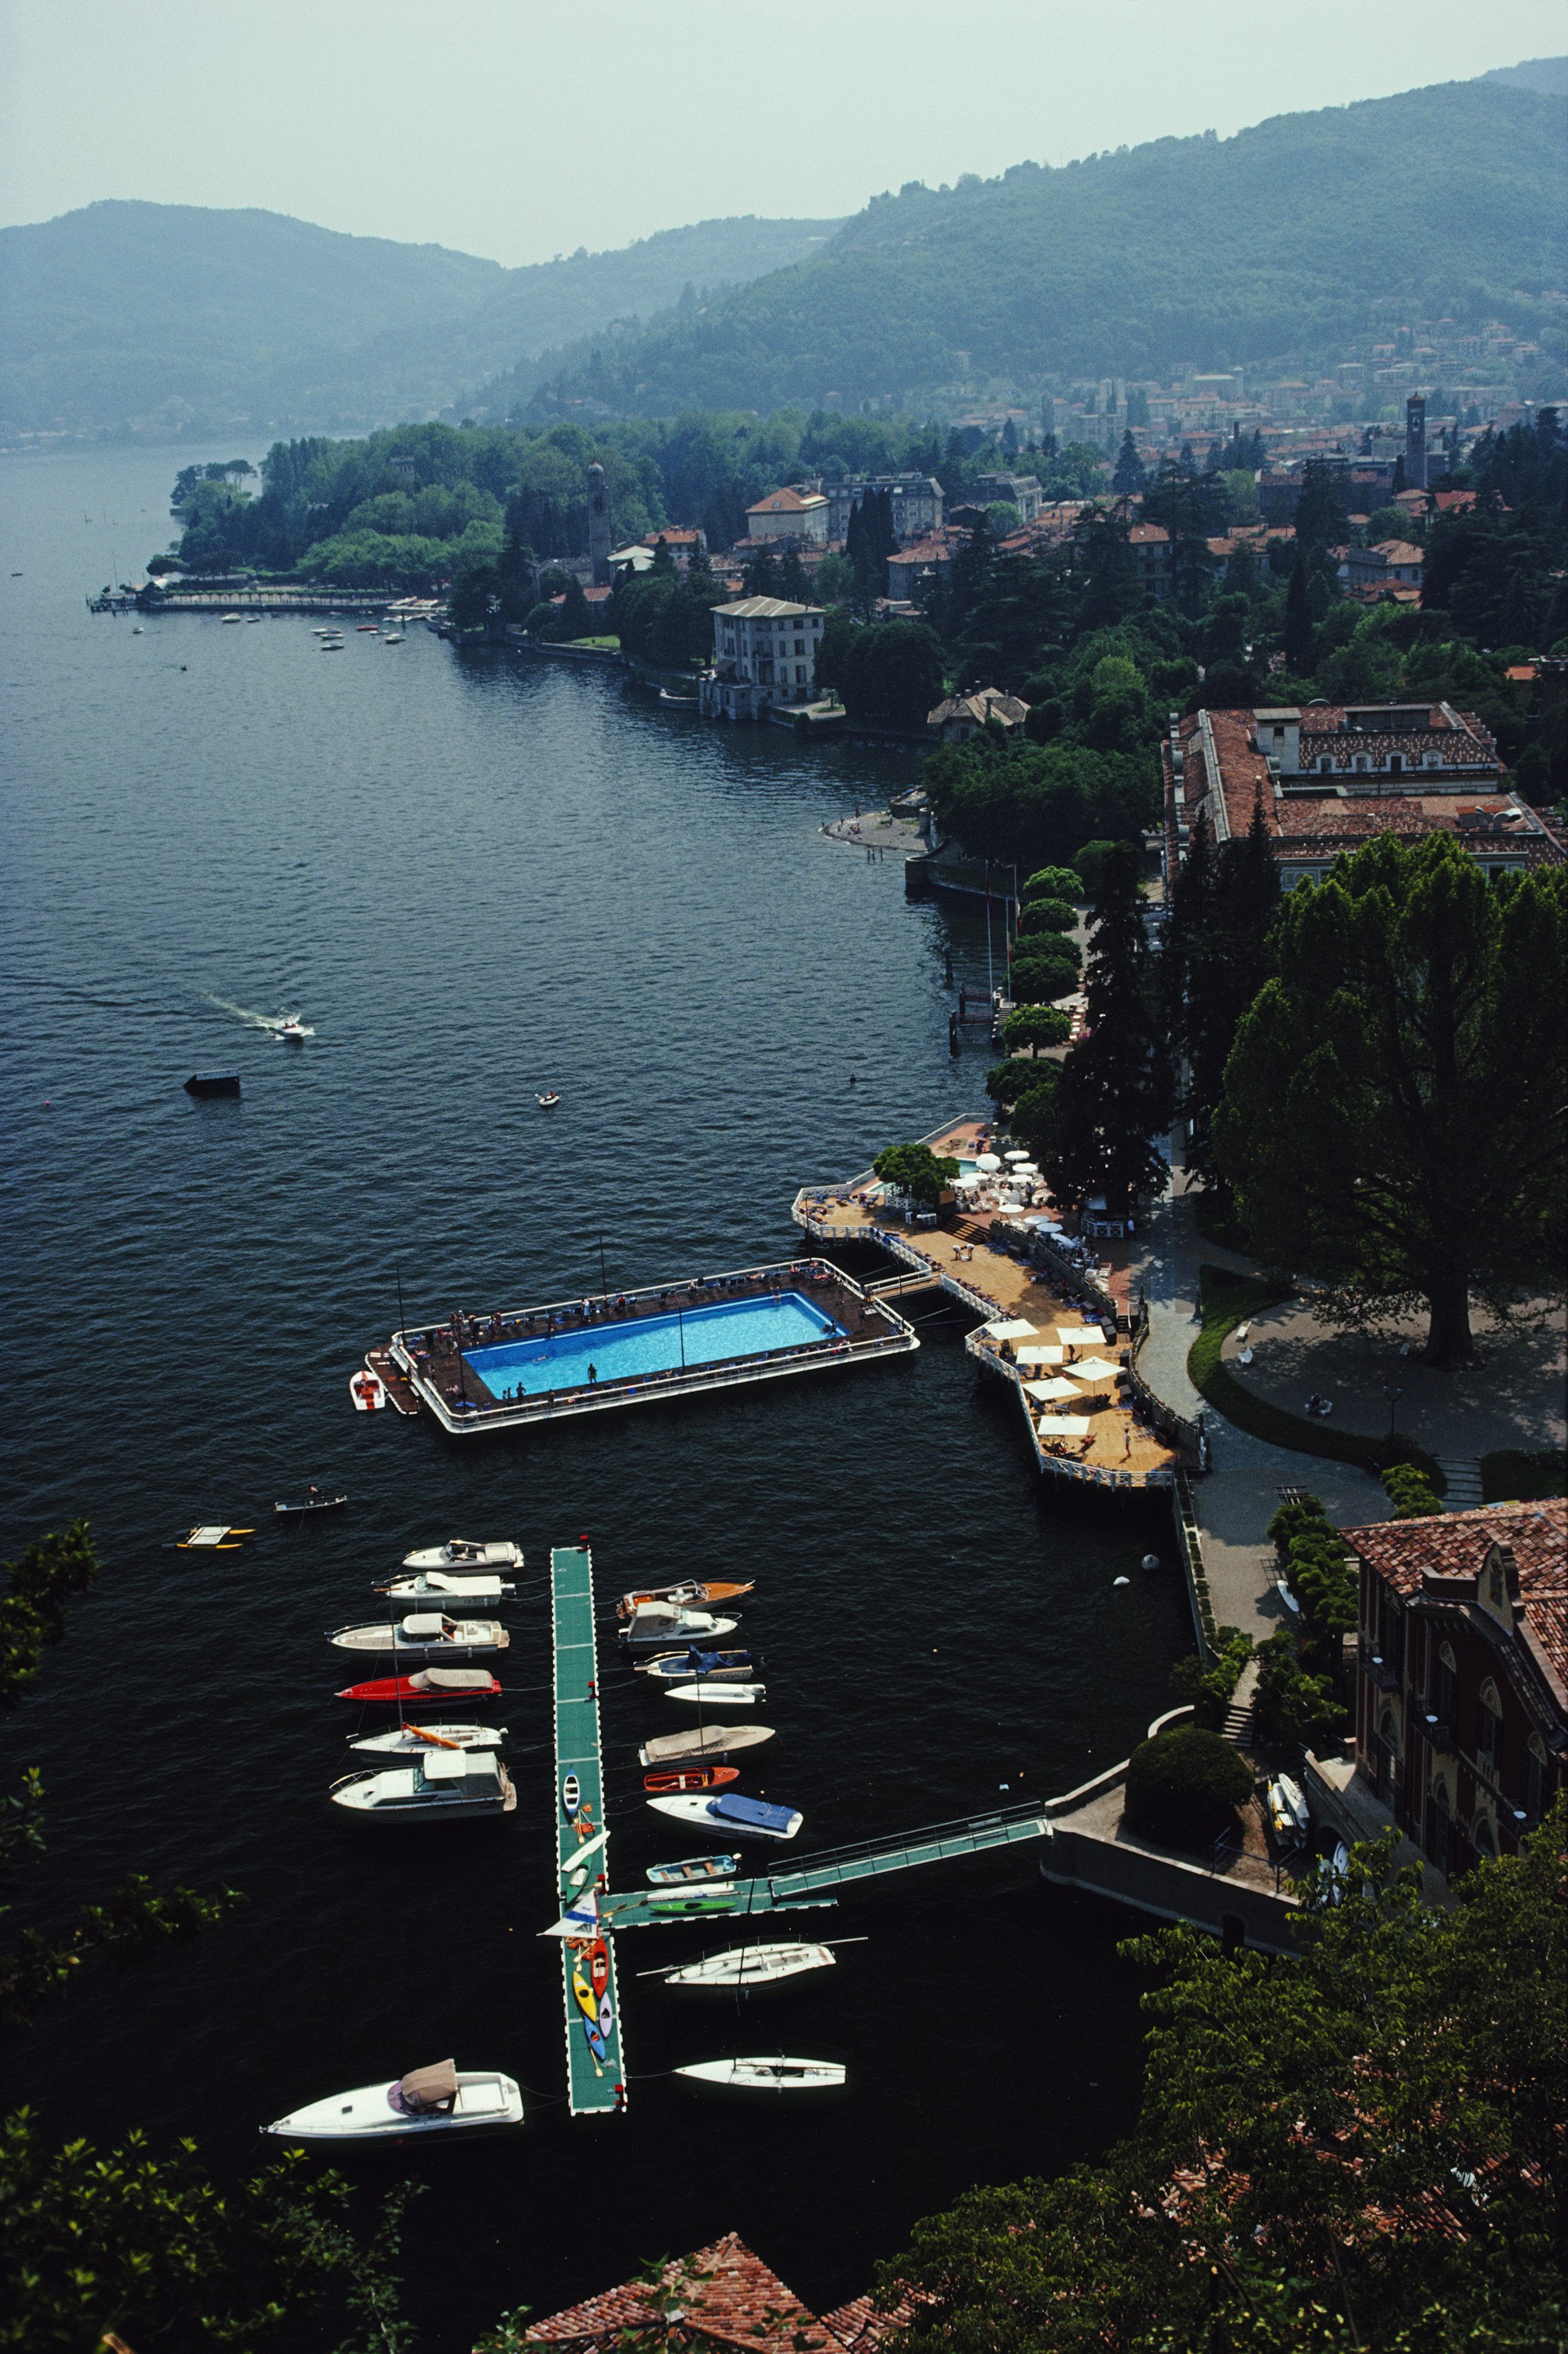 Hotel On Lake Como by Slim Aarons